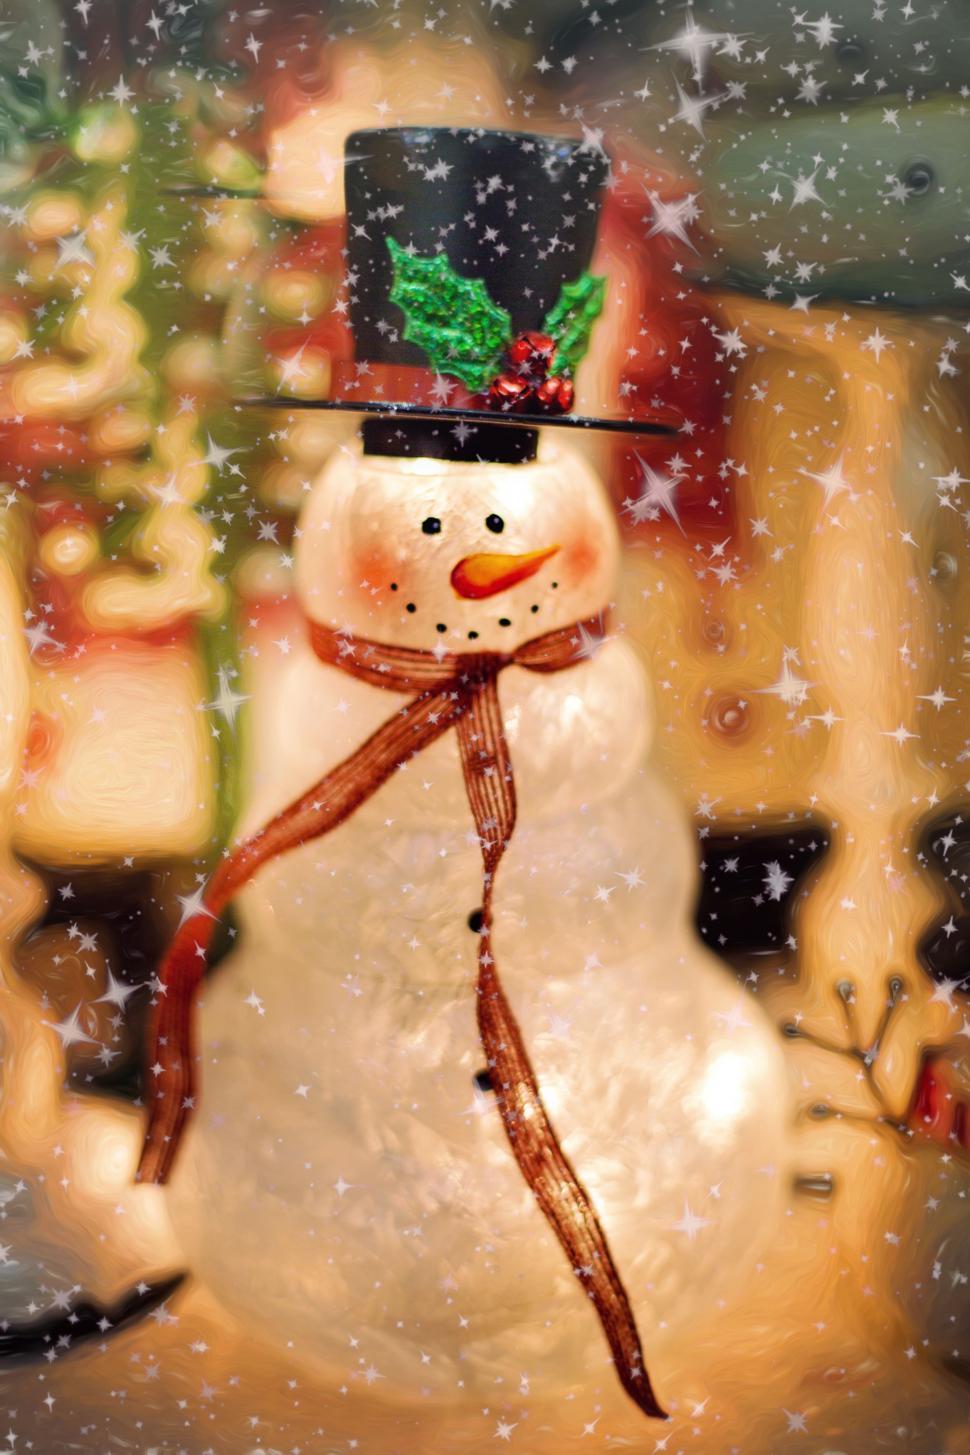 Free Image of Christmas snowman  